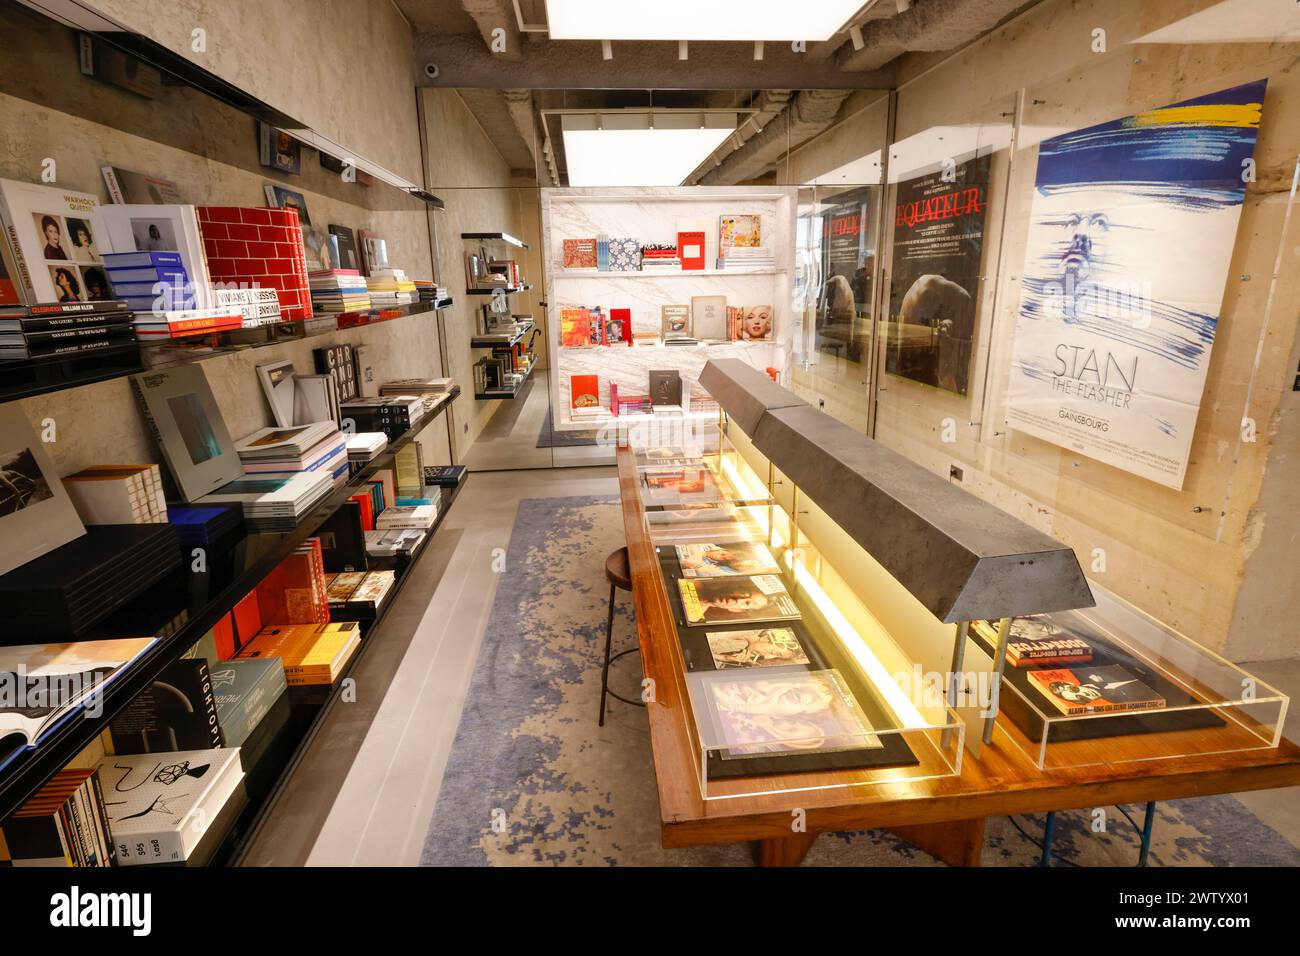 SAINT LAURENT HAS OPENED A BOOK SHOP IN PARIS Stock Photo